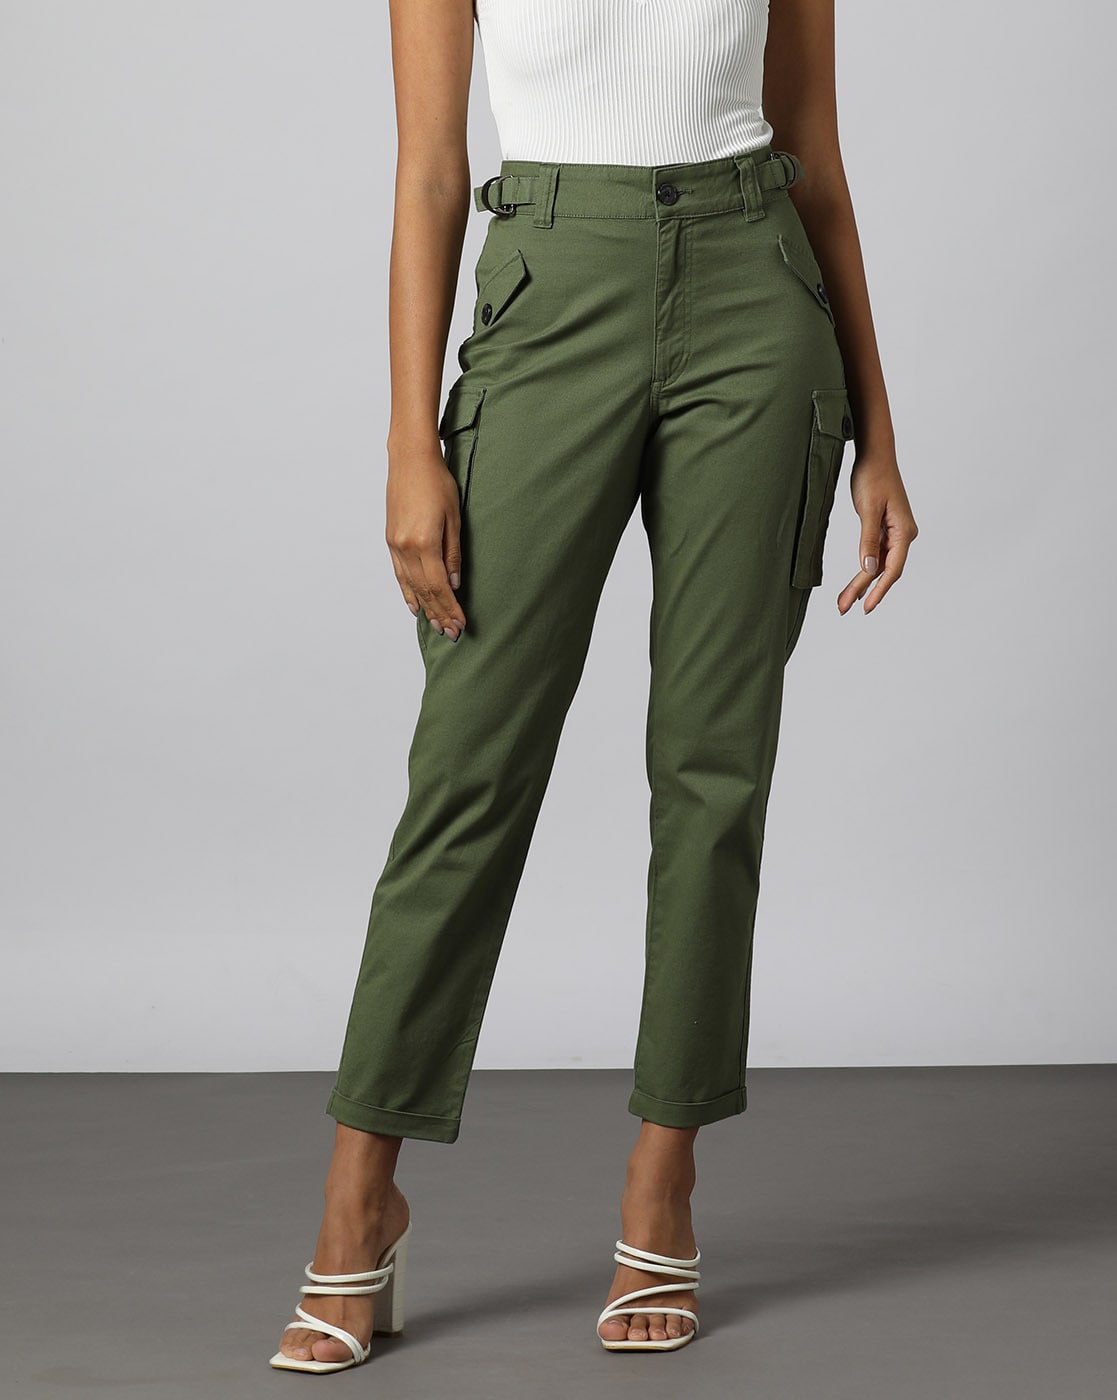 Share more than 128 green pants womens super hot